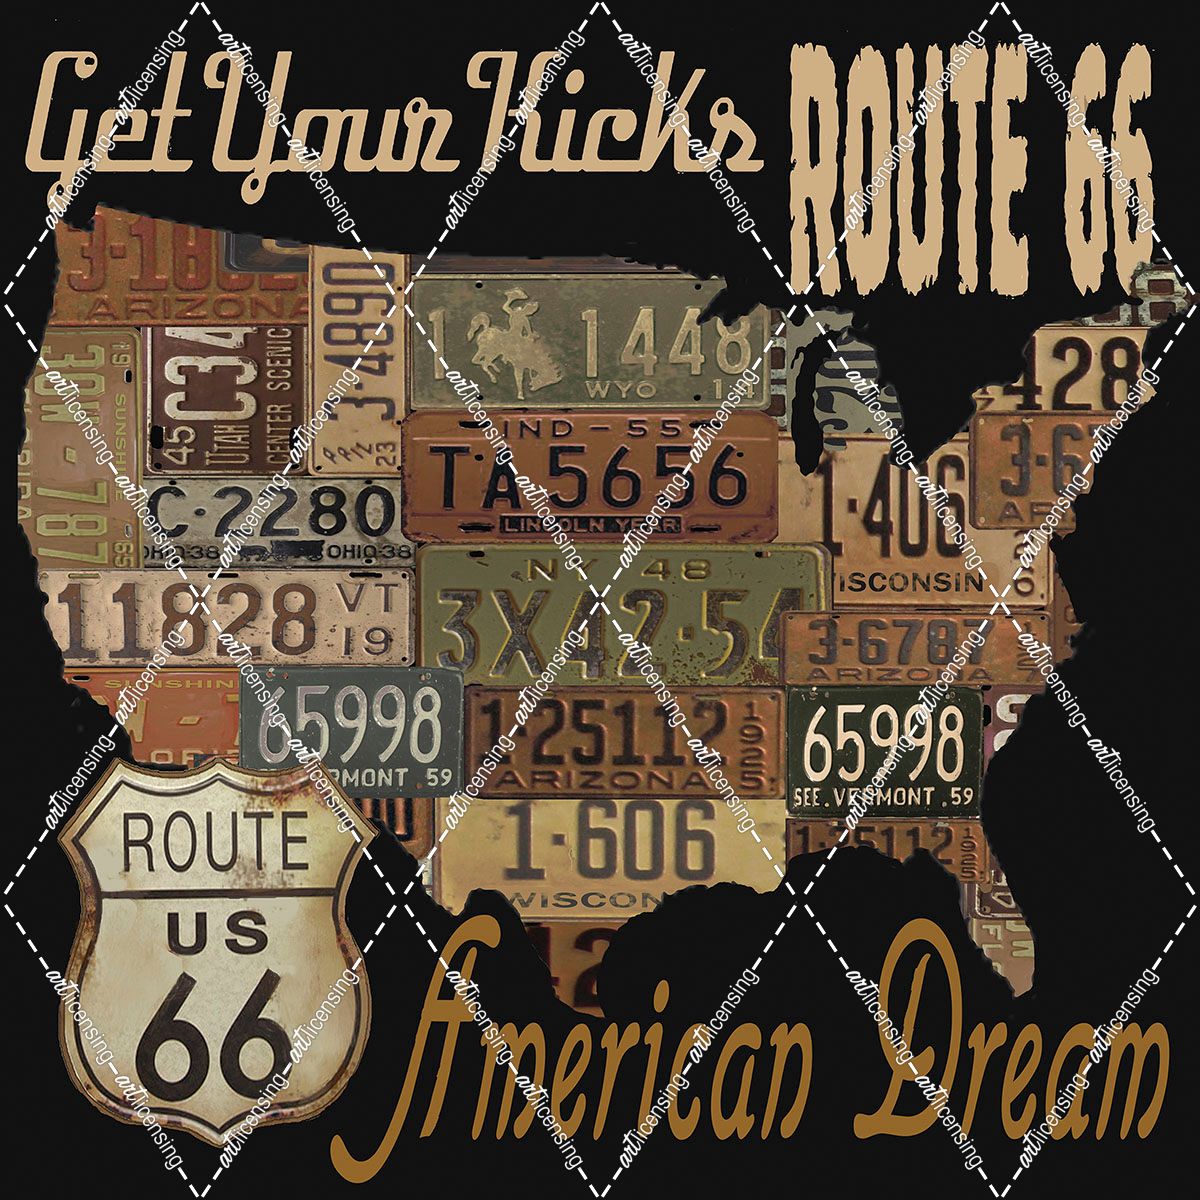 Jp2162-Route 66-American Dream-Kicks-112014